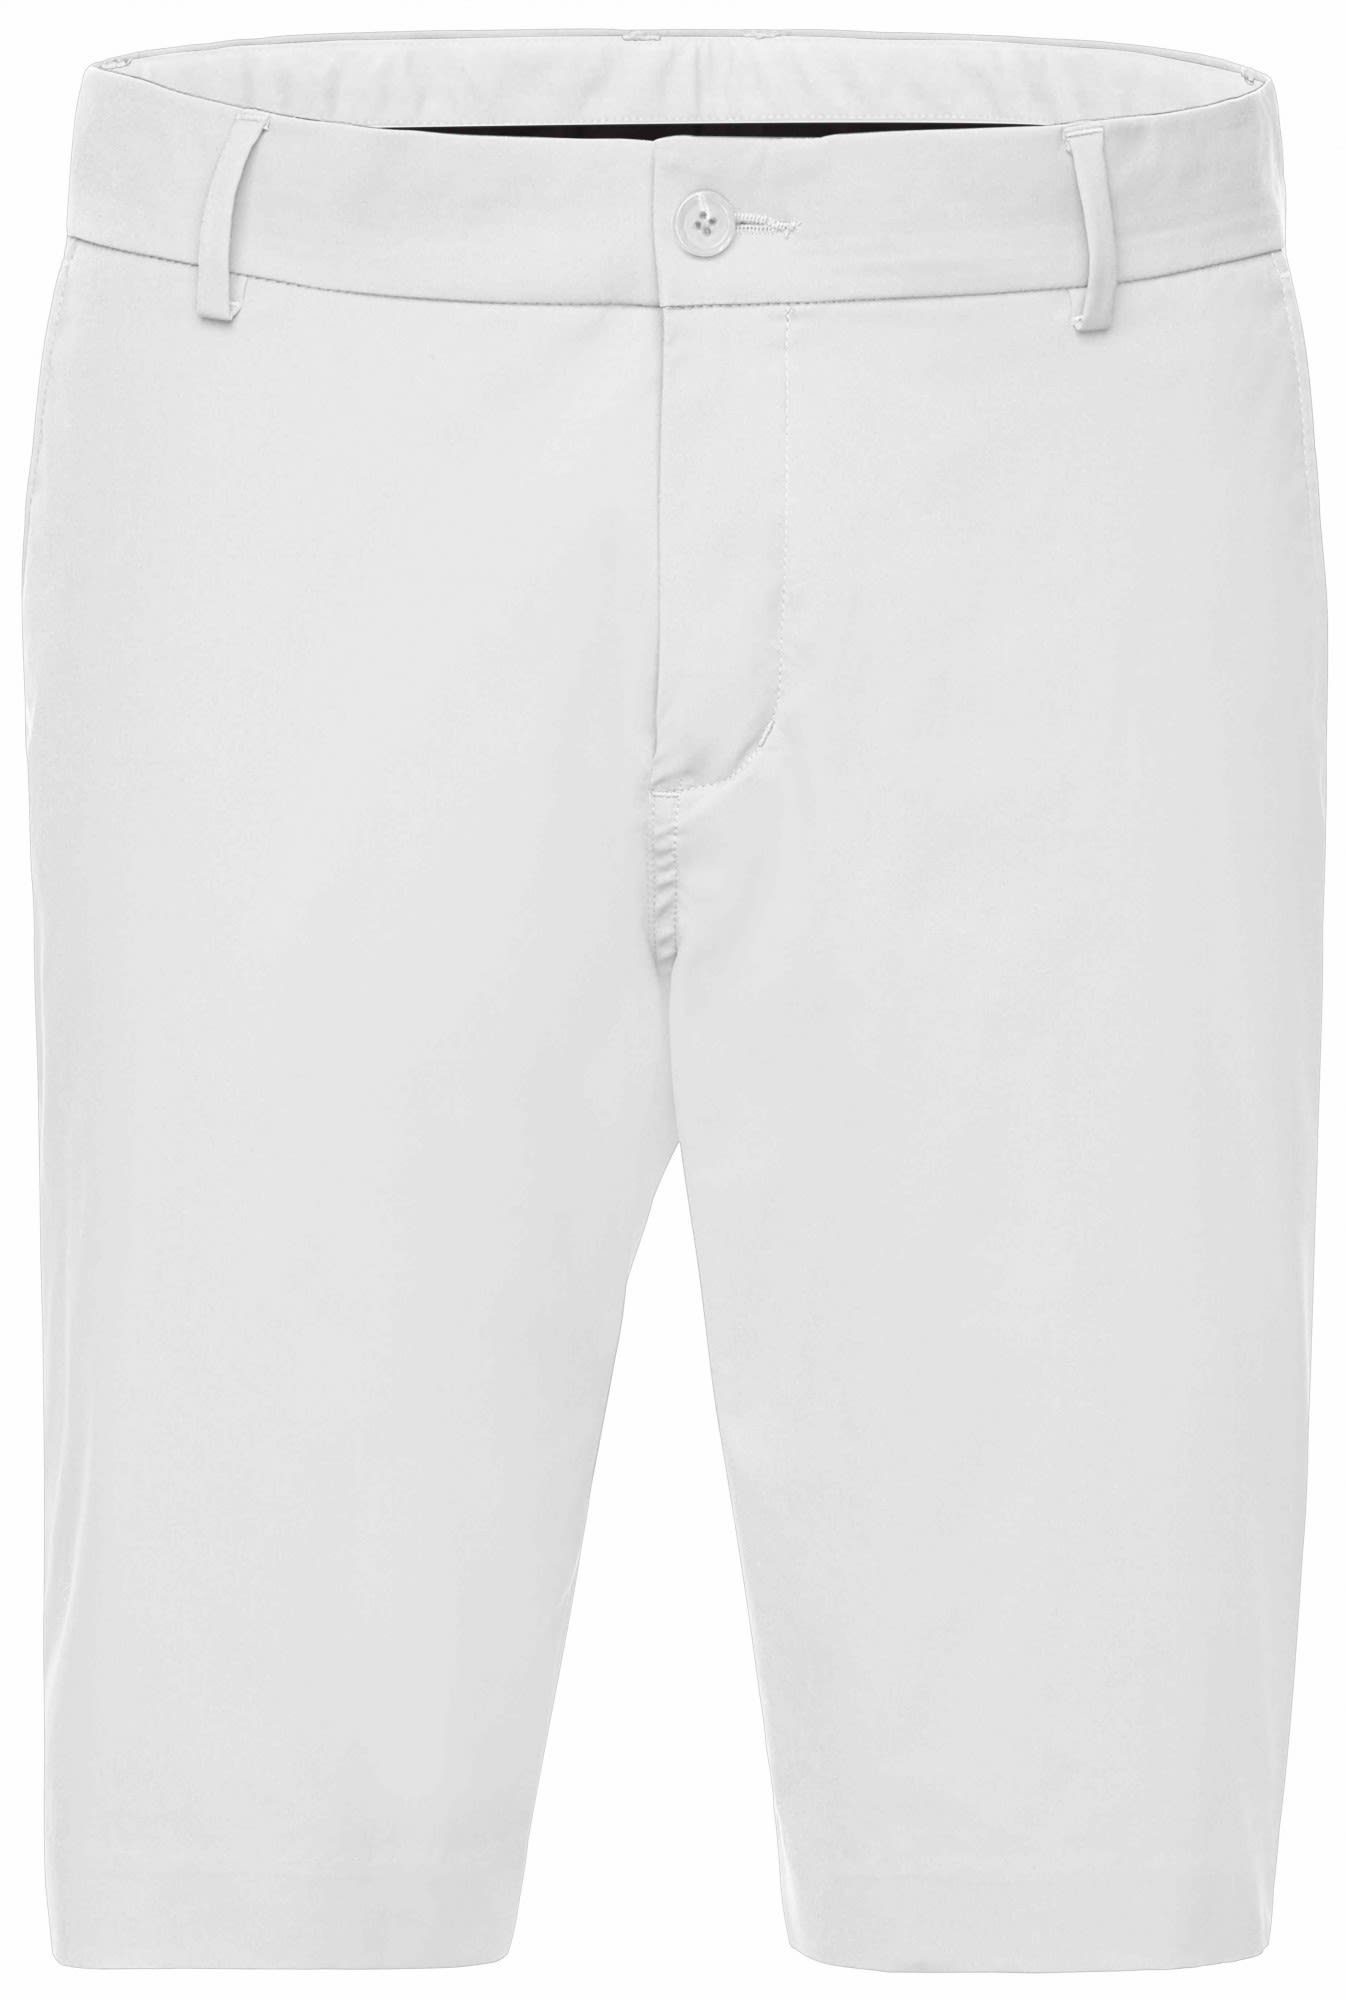 KJUS Strandshorts Kjus Men Inaction Shorts (tailored Fit) Herren White